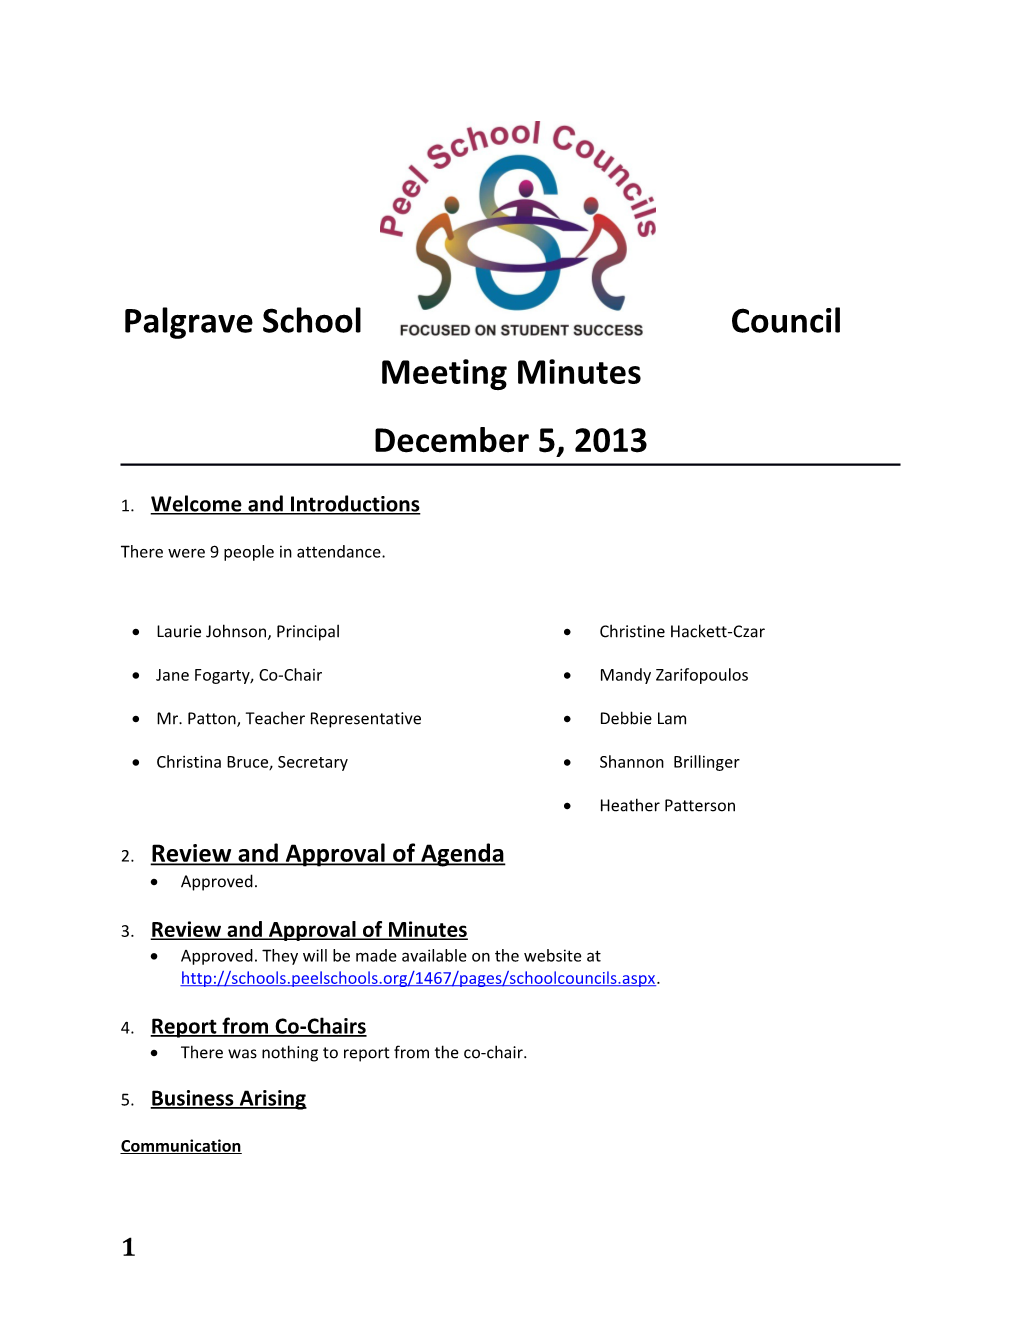 Palgrave School Council Meeting Minutes